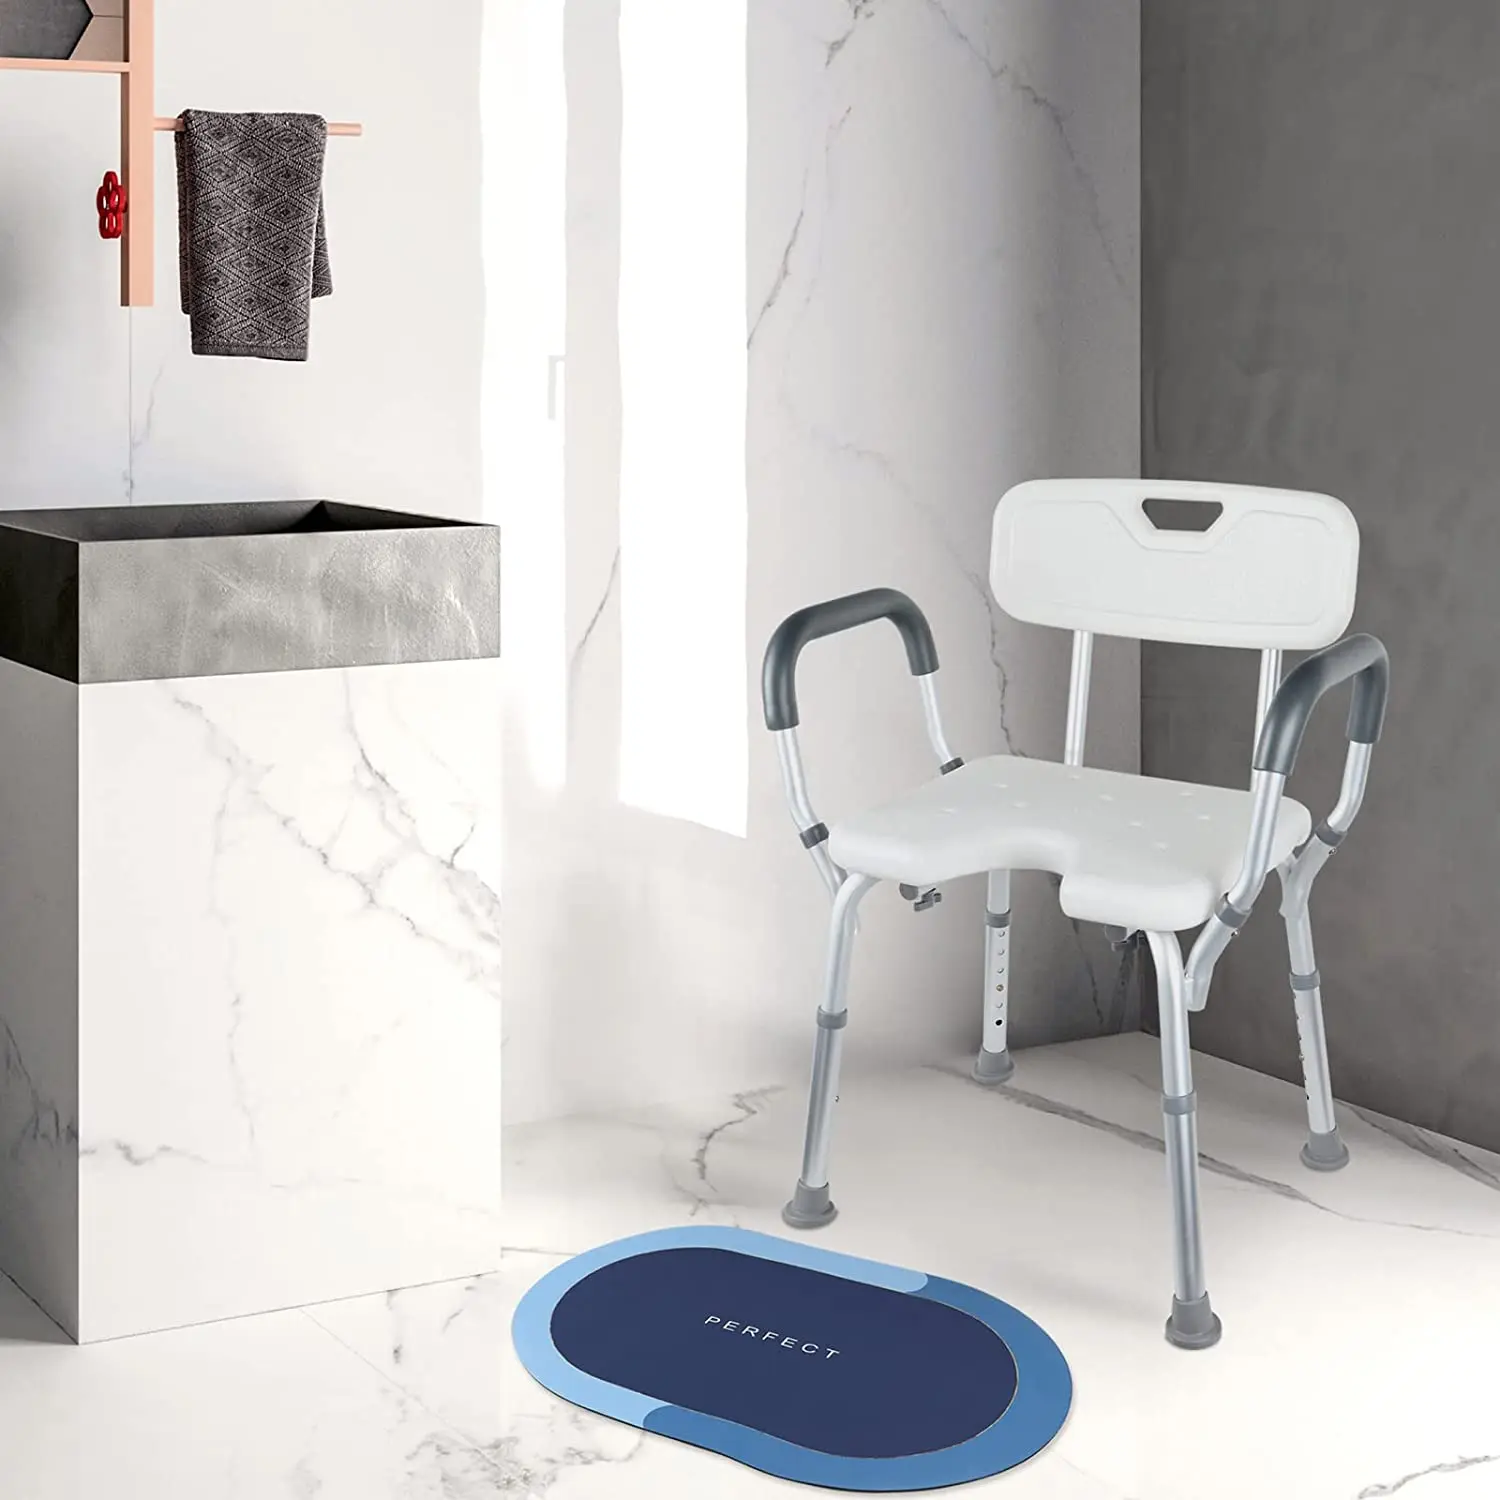 Portable detachable lightweight shower chair